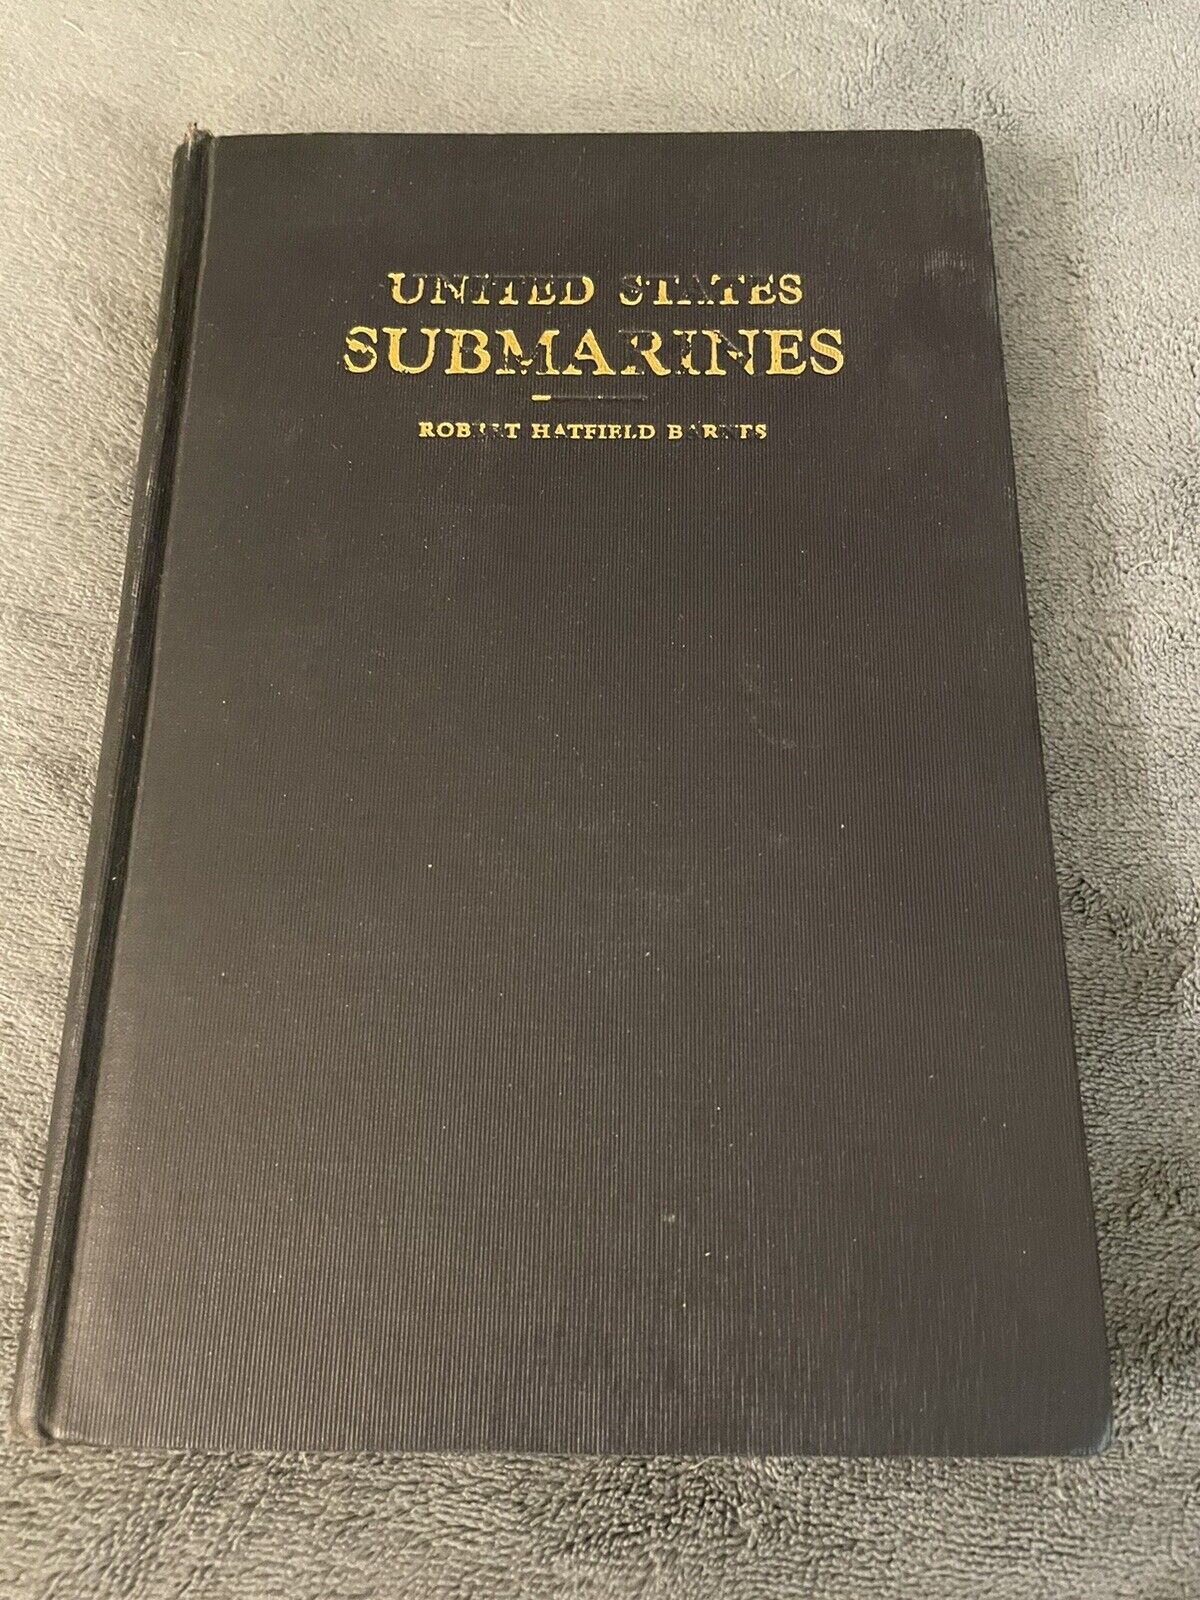 1945 US Navy Book United States Submarines by Robert Hatfield Barnes